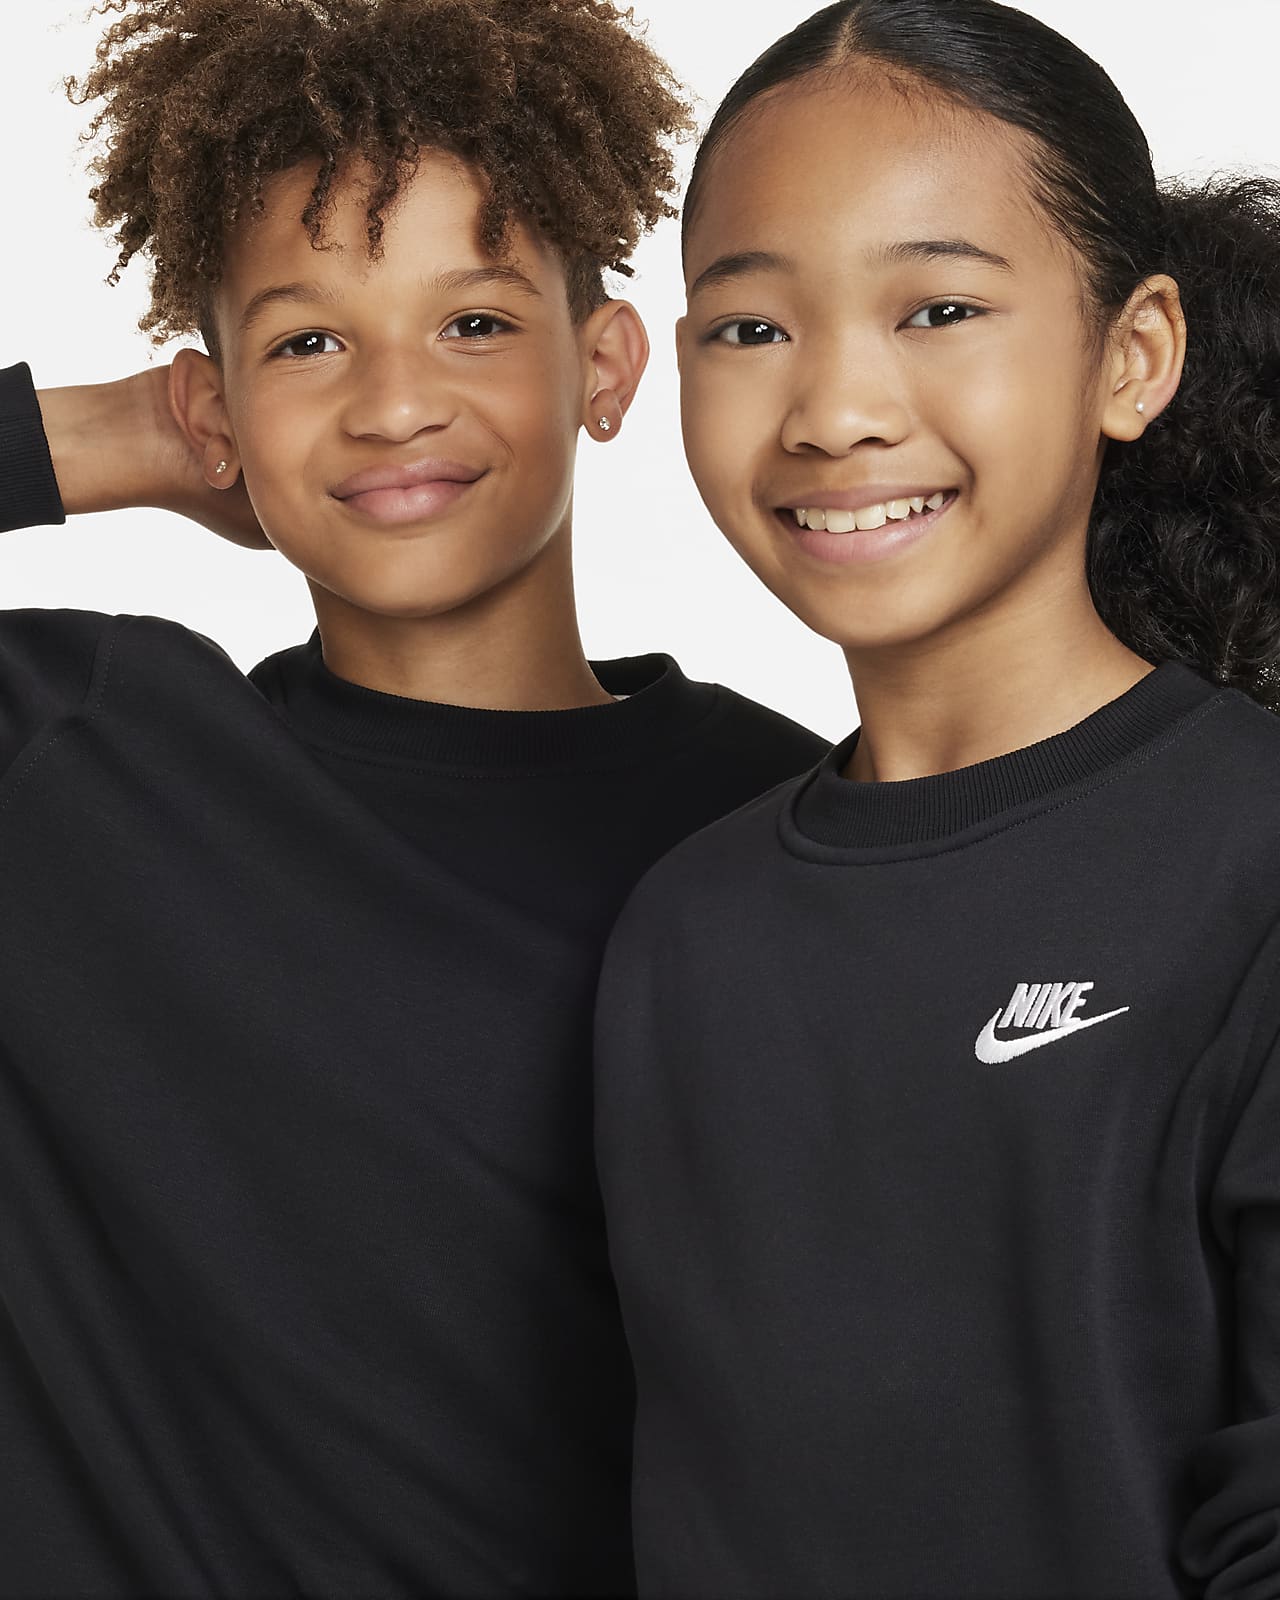 Nike chándal Club para bebé en Negro